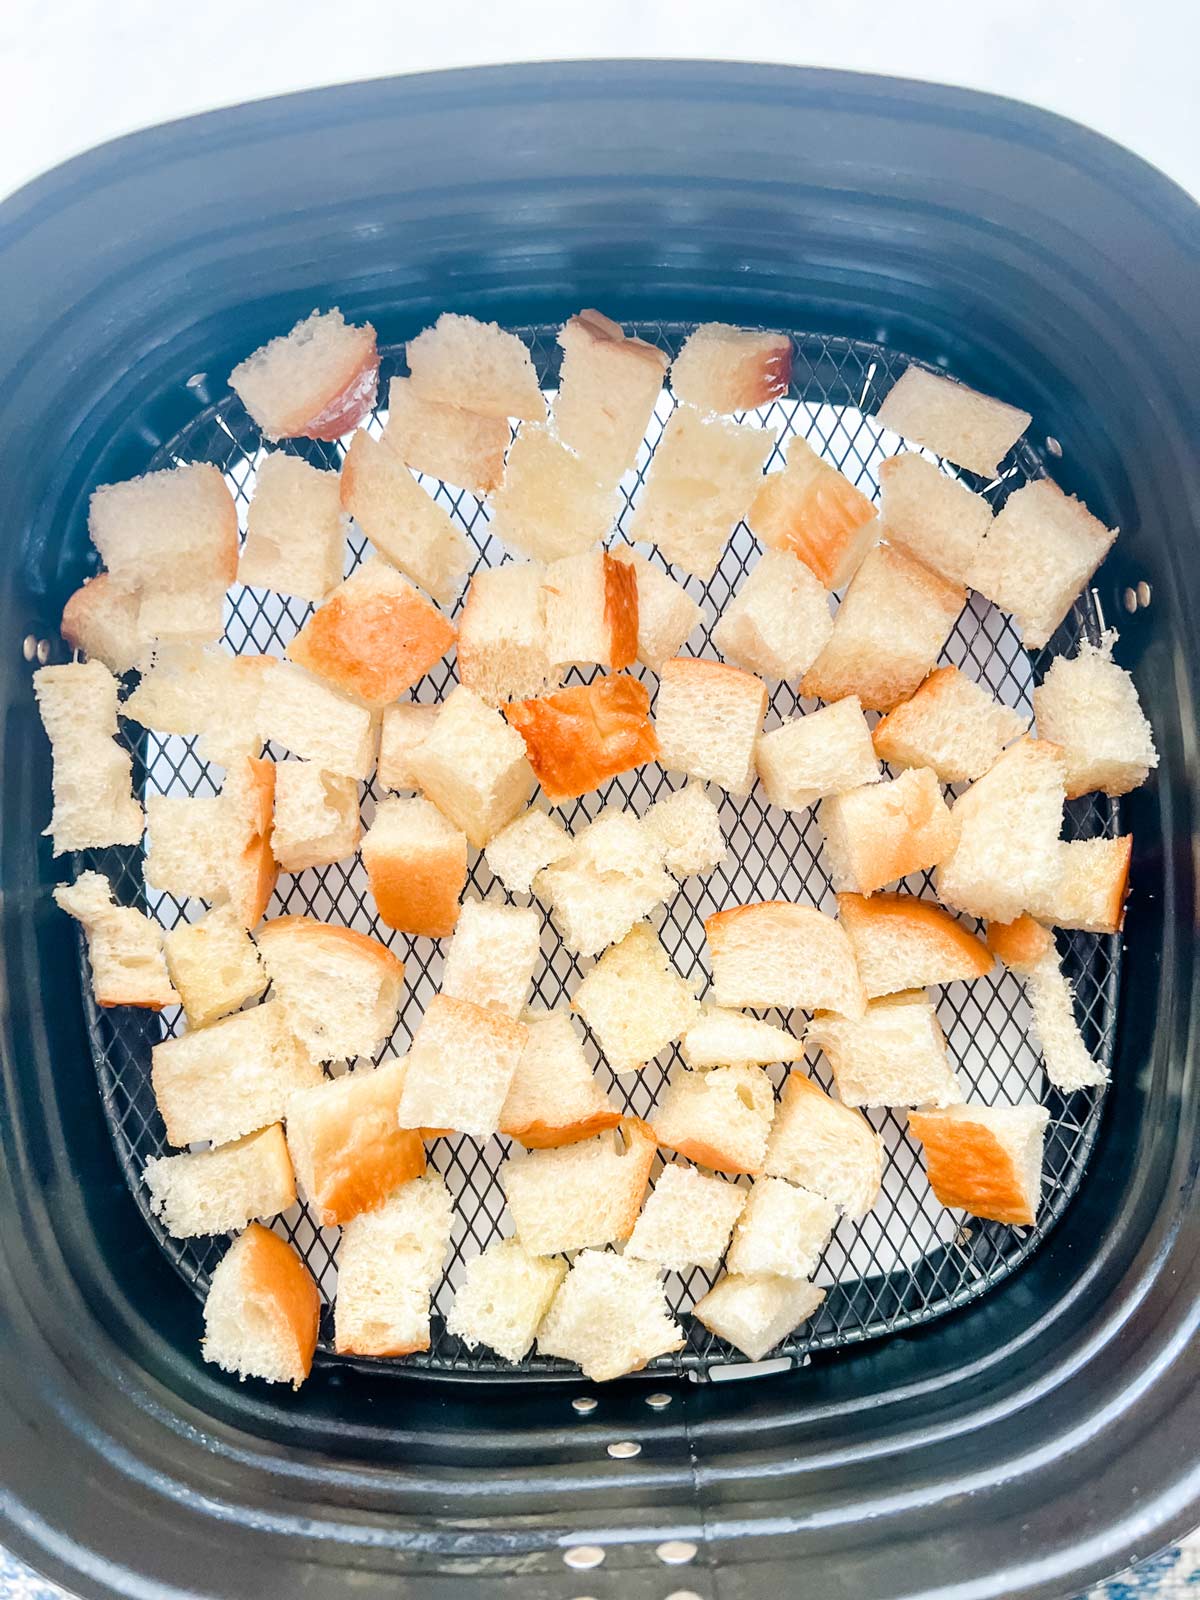 Bread cubes in an air fryer.